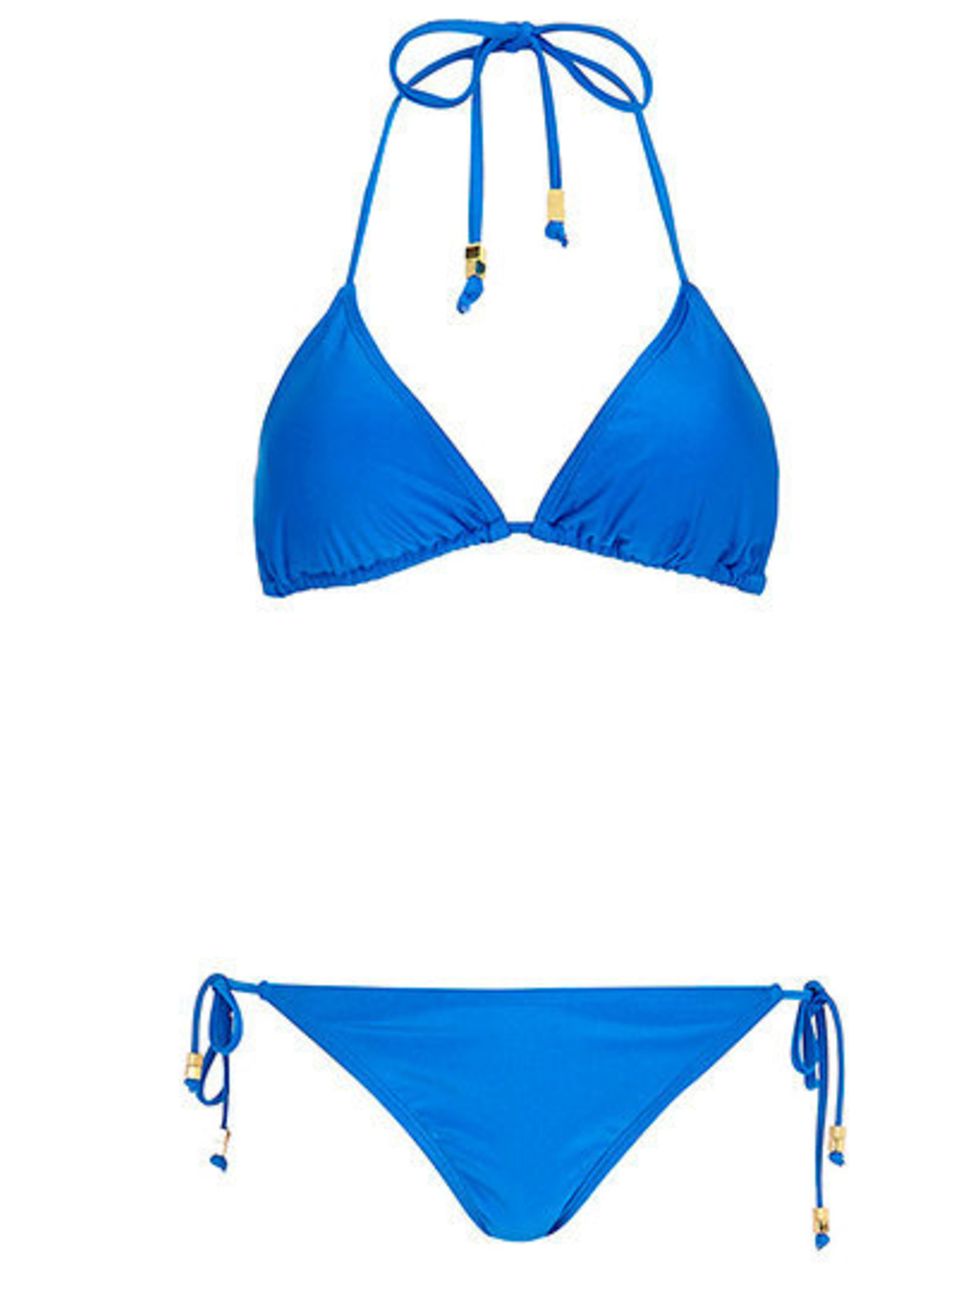 <p>Classic and affordable. This River Island Bikini <a href="http://www.riverisland.com/women/swimwear--beachwear/bikinis/Blue-triangle-bikini-top-652252">top, </a>£12, and <a href="http://www.riverisland.com/women/swimwear--beachwear/bikinis/Blue-tie-sid